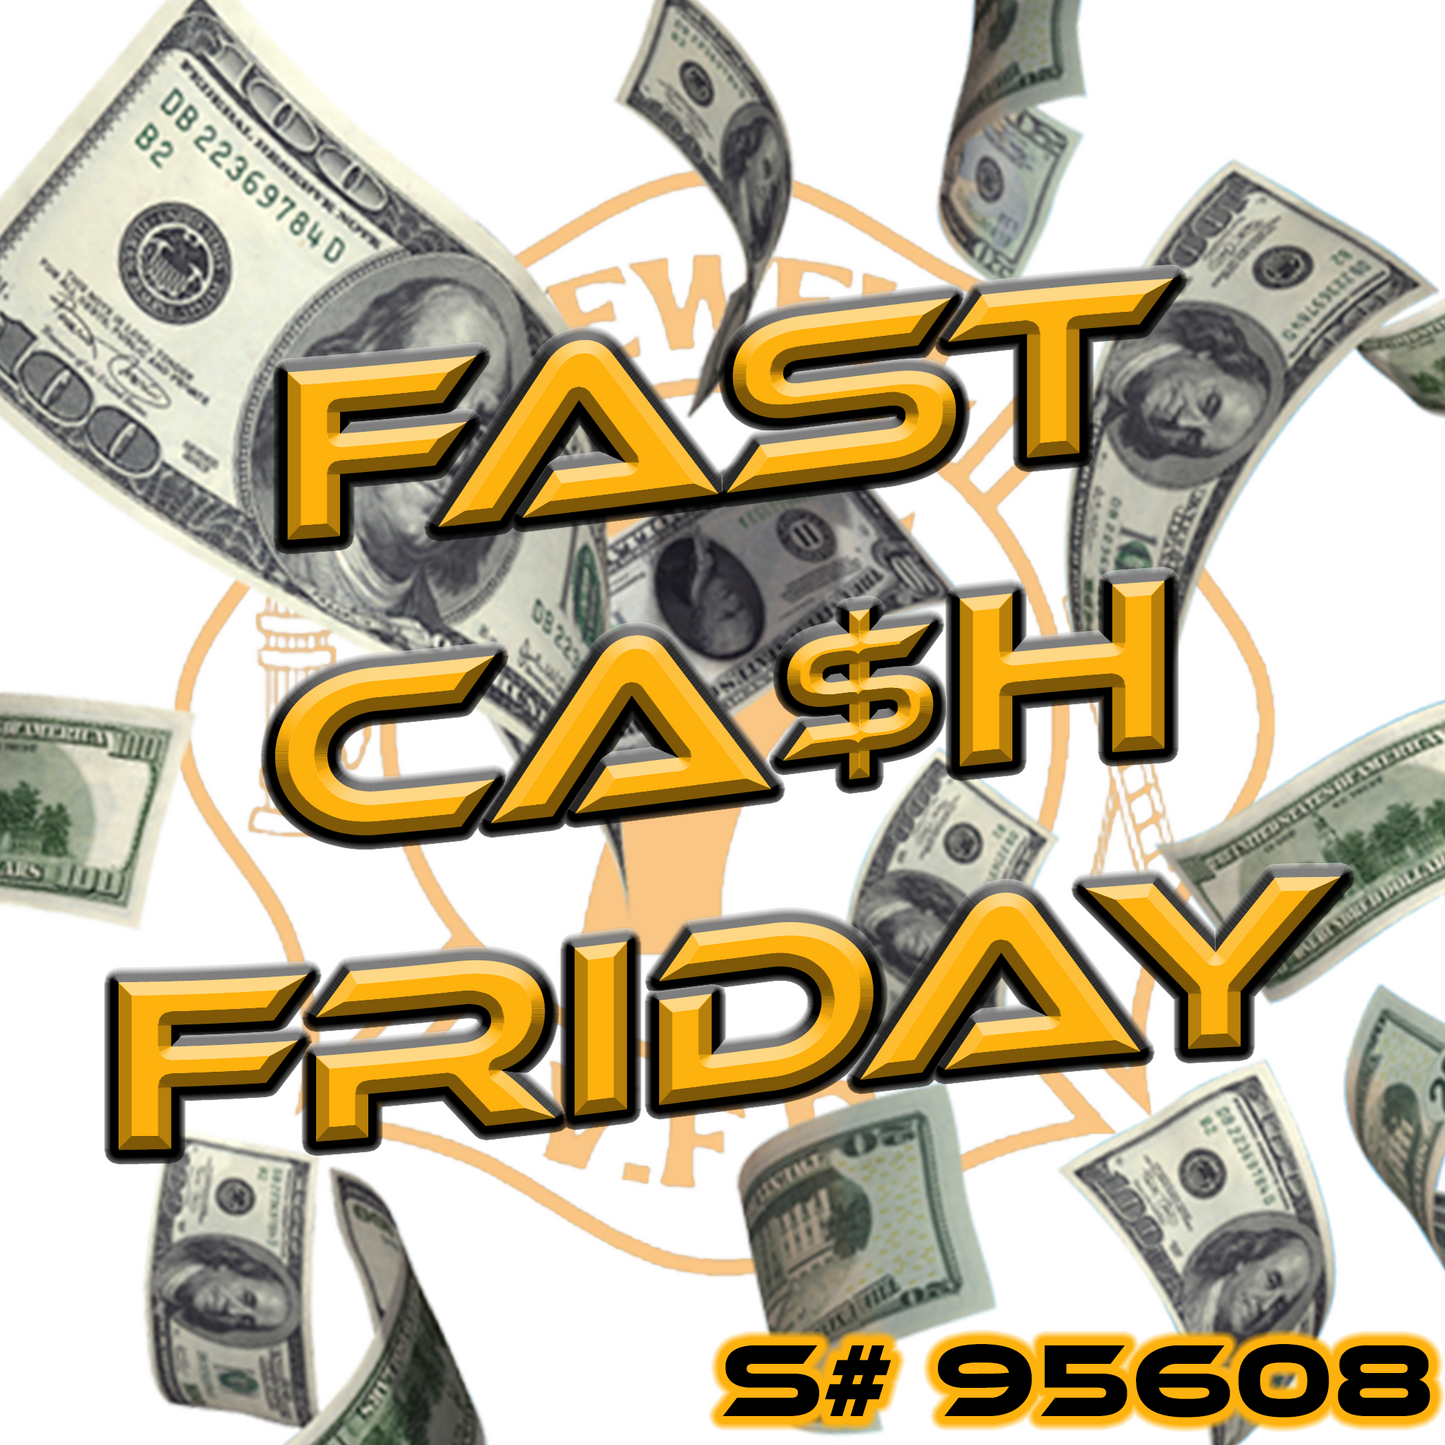 Sure Tip # 95608 - Fast Cash Friday